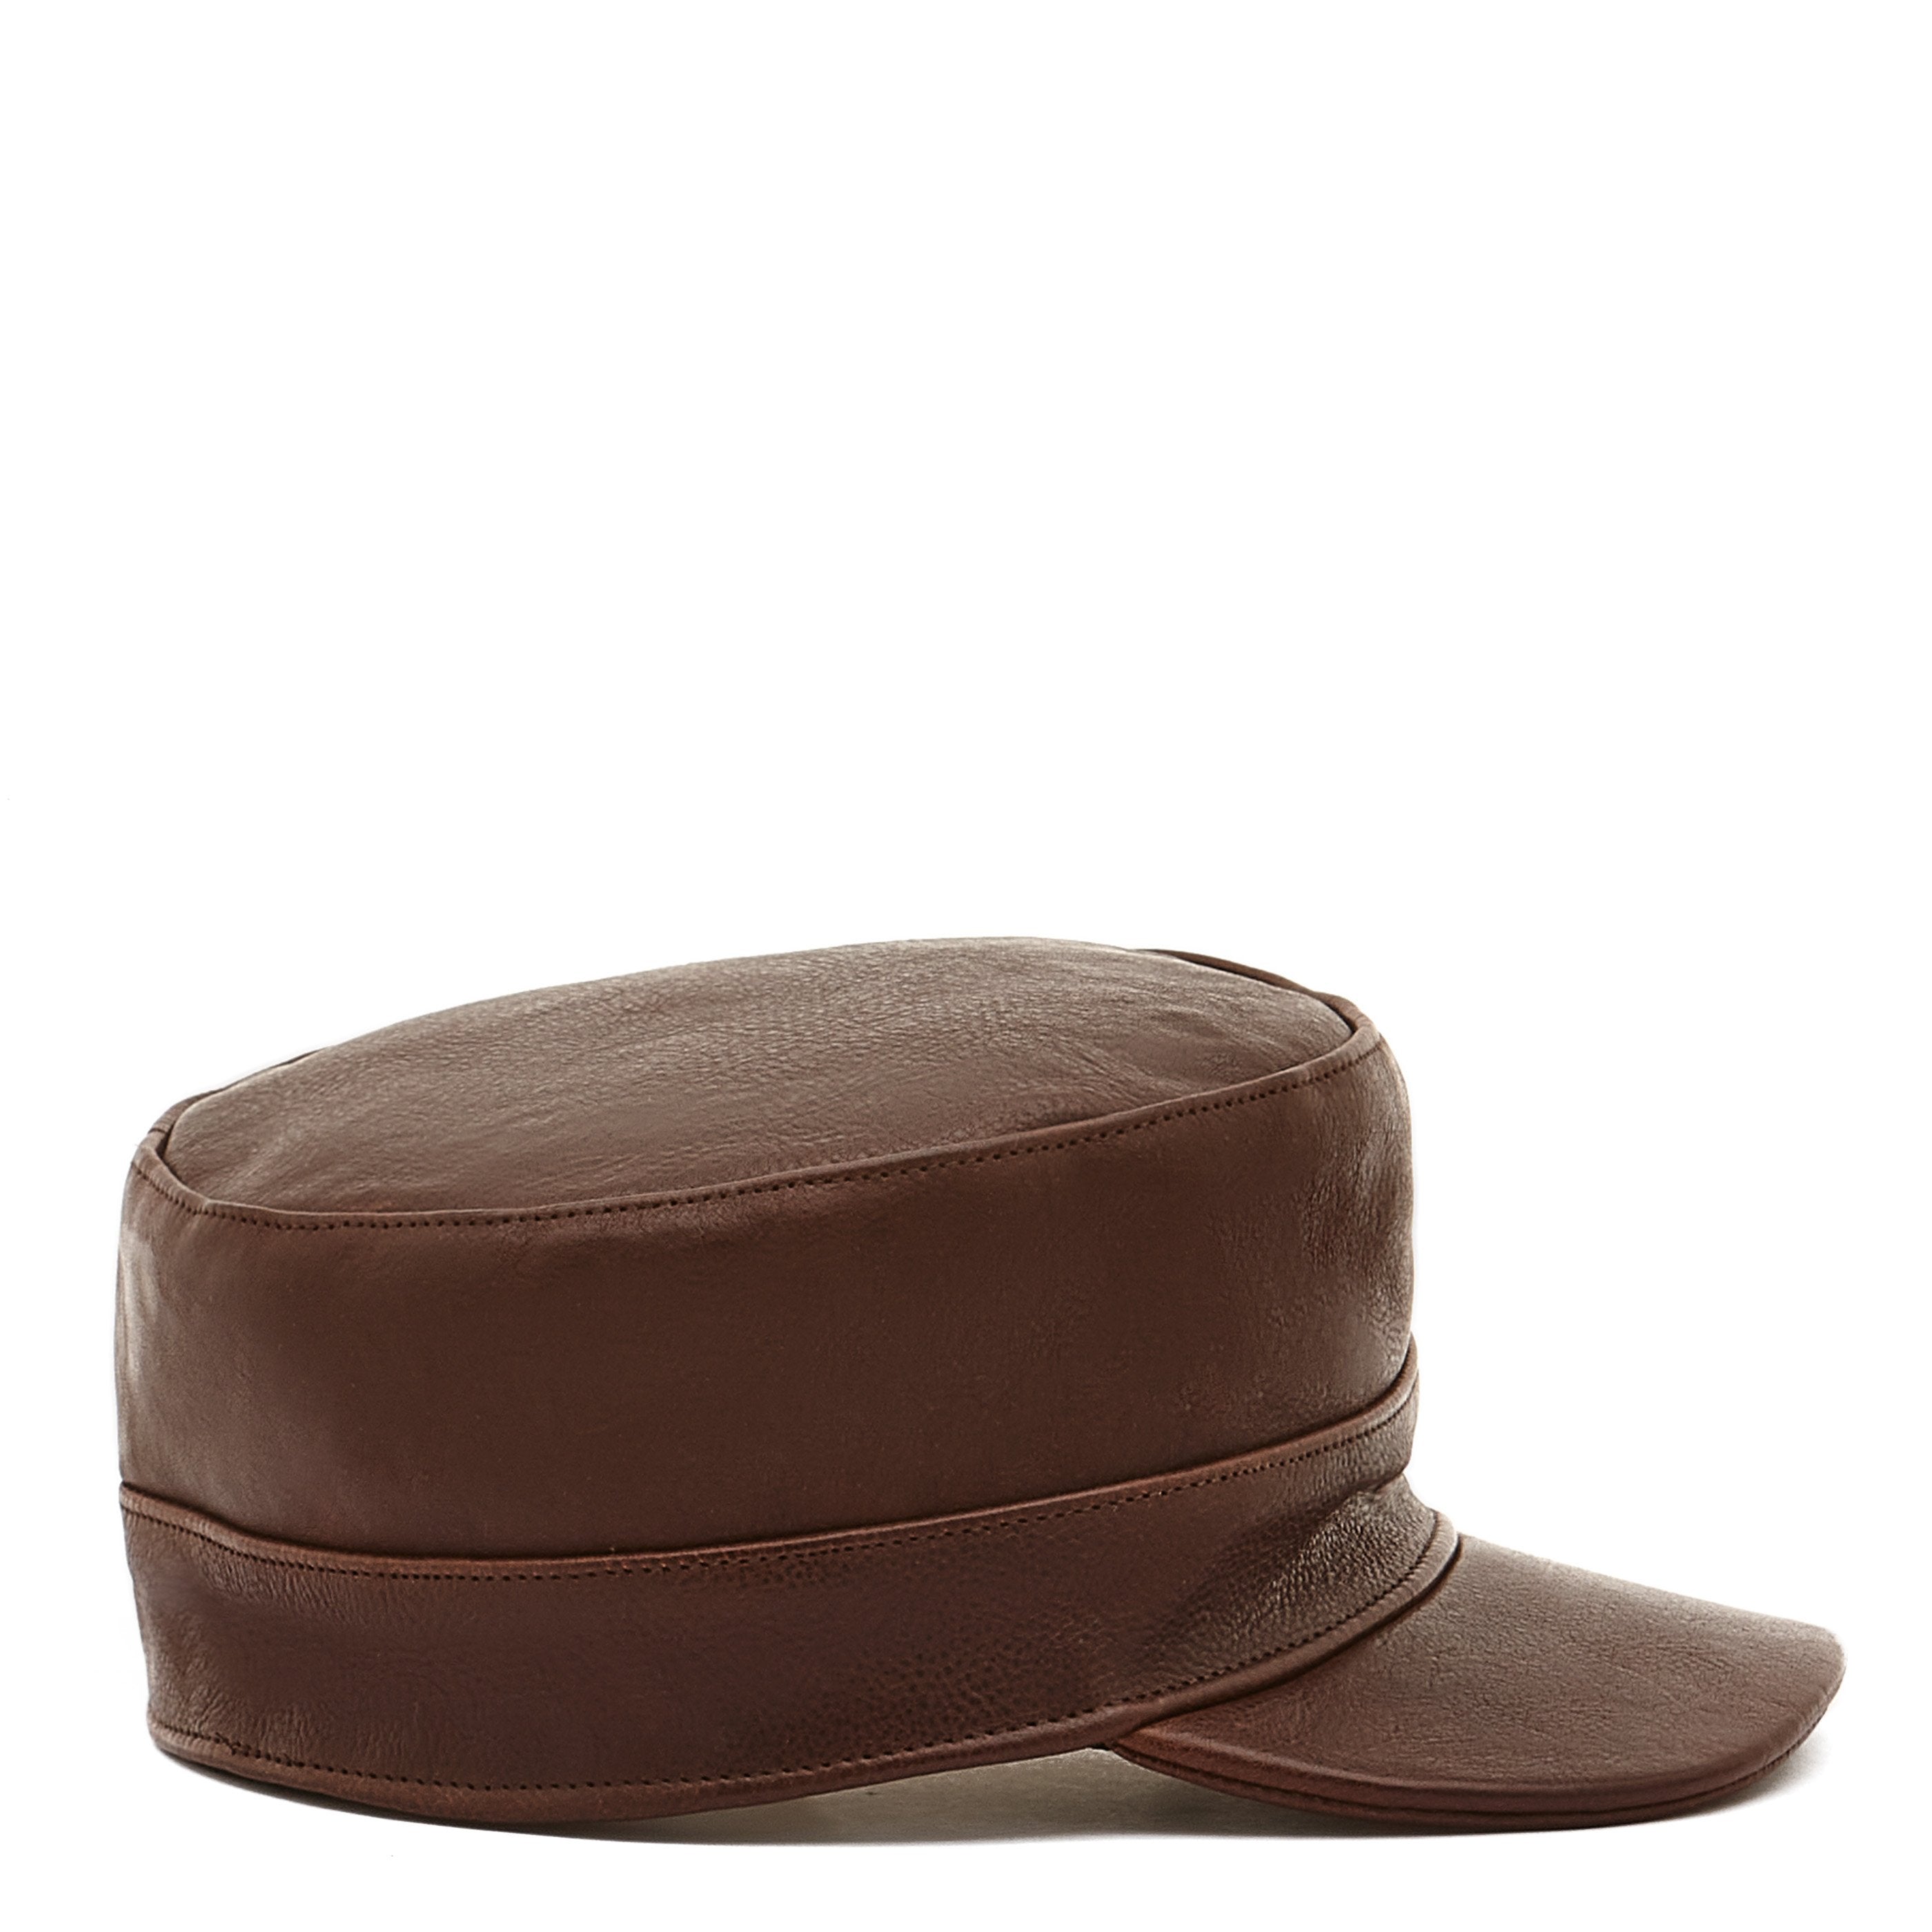 Stoccolma | Men's Hat in Vintage Leather color Dark Brown